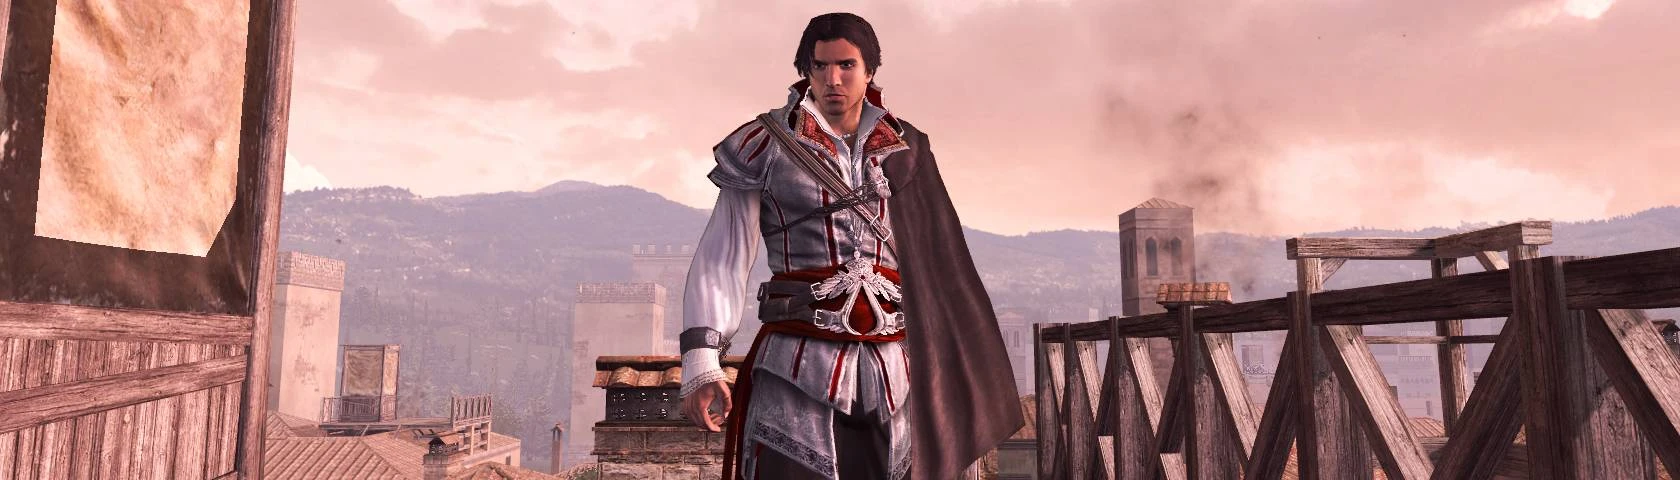 Ezio face Comparison Close WIP image - Assassin's Creed 2 Overhaul mod for Assassin's  Creed II - ModDB